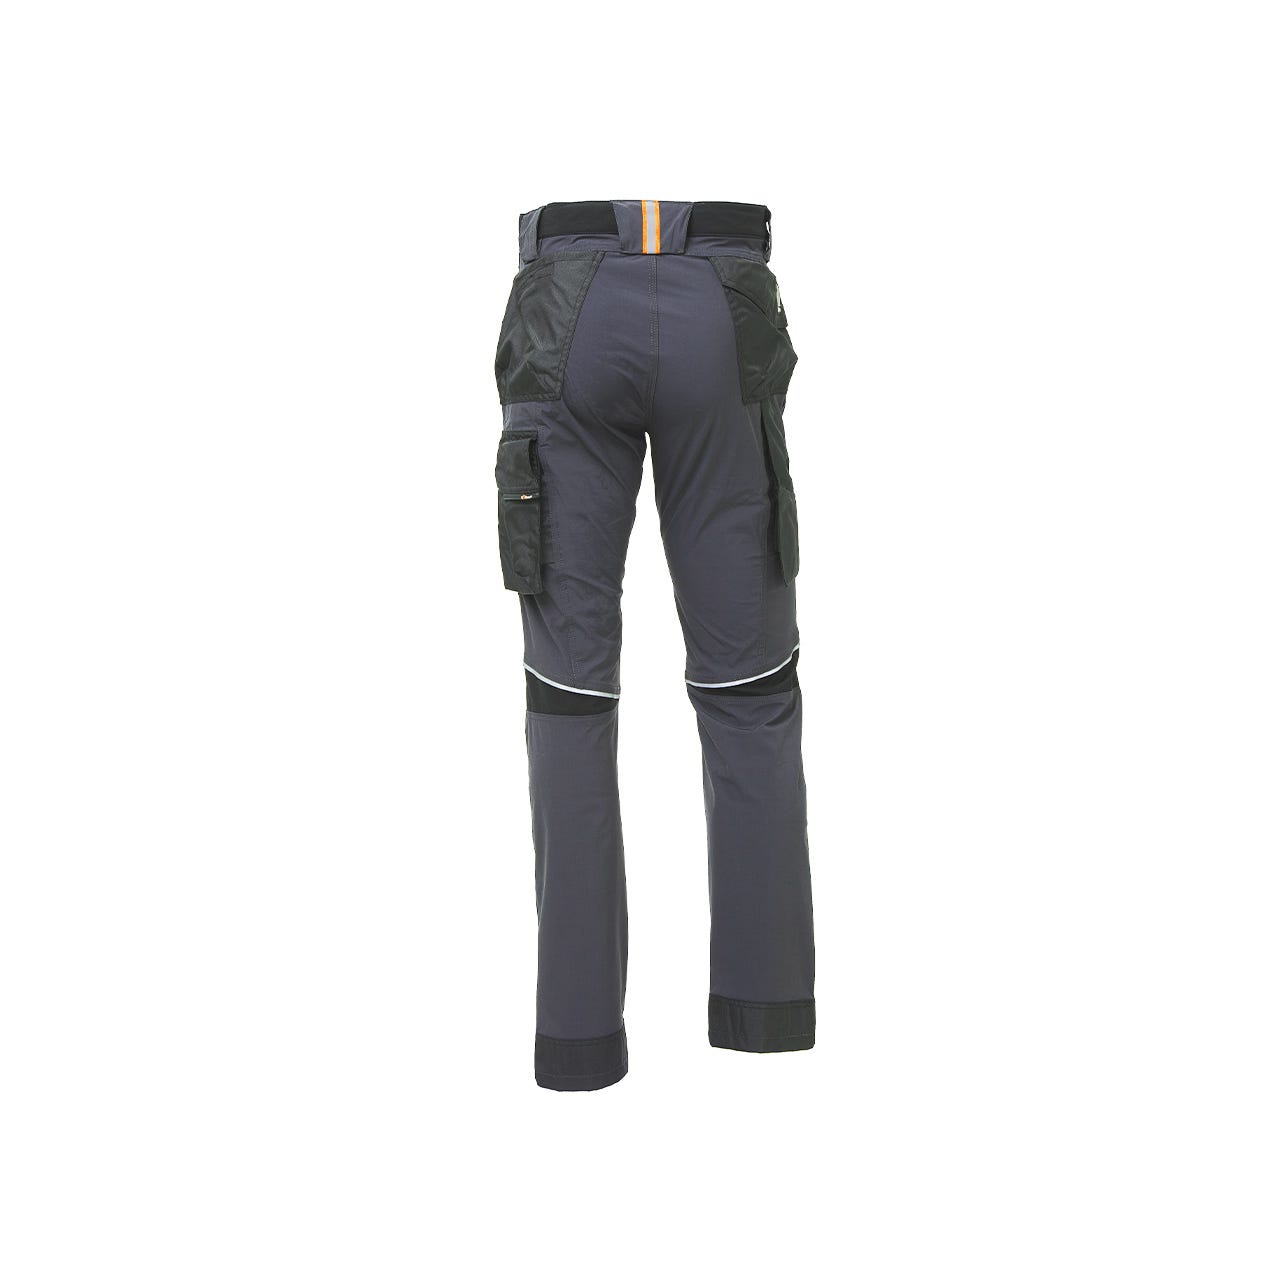 U-Power - Pantalon de travail Slim gris WORLD - Gris - XL 4